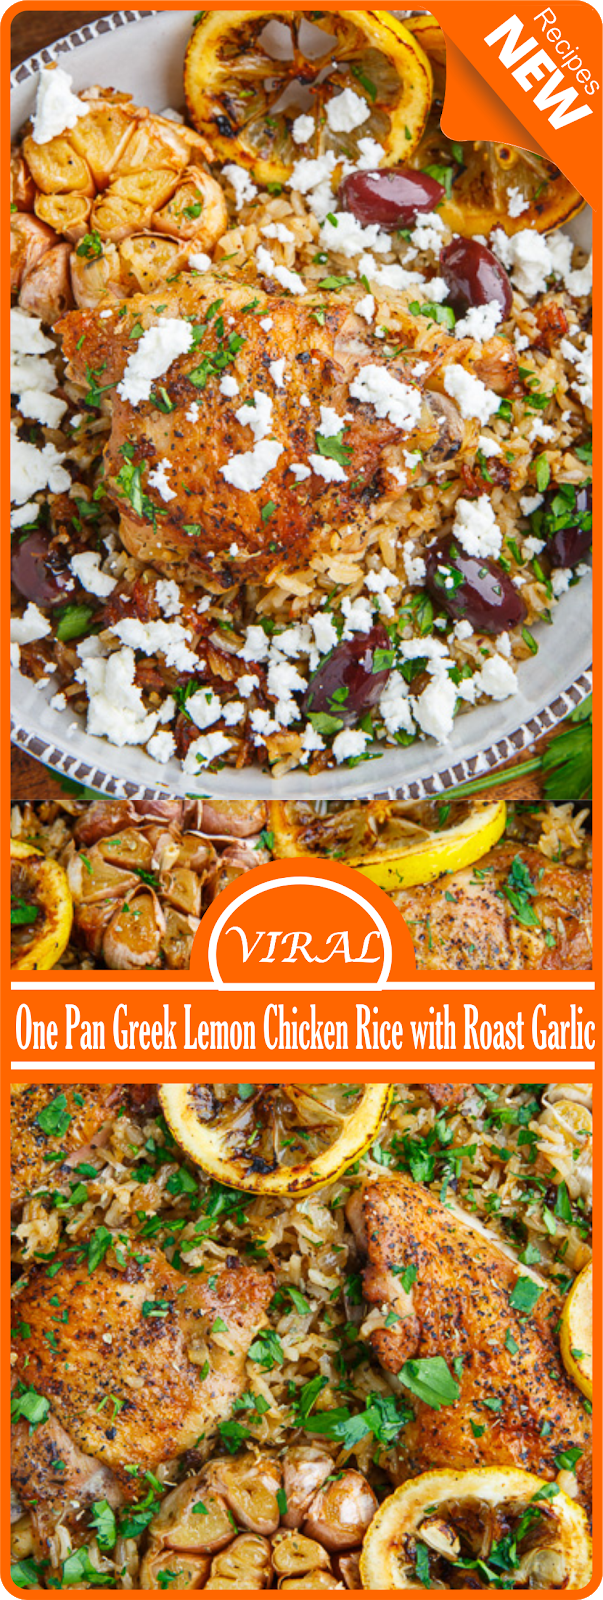 One Pan Greek Lemon Chicken Rice with Roast Garlic | Think food